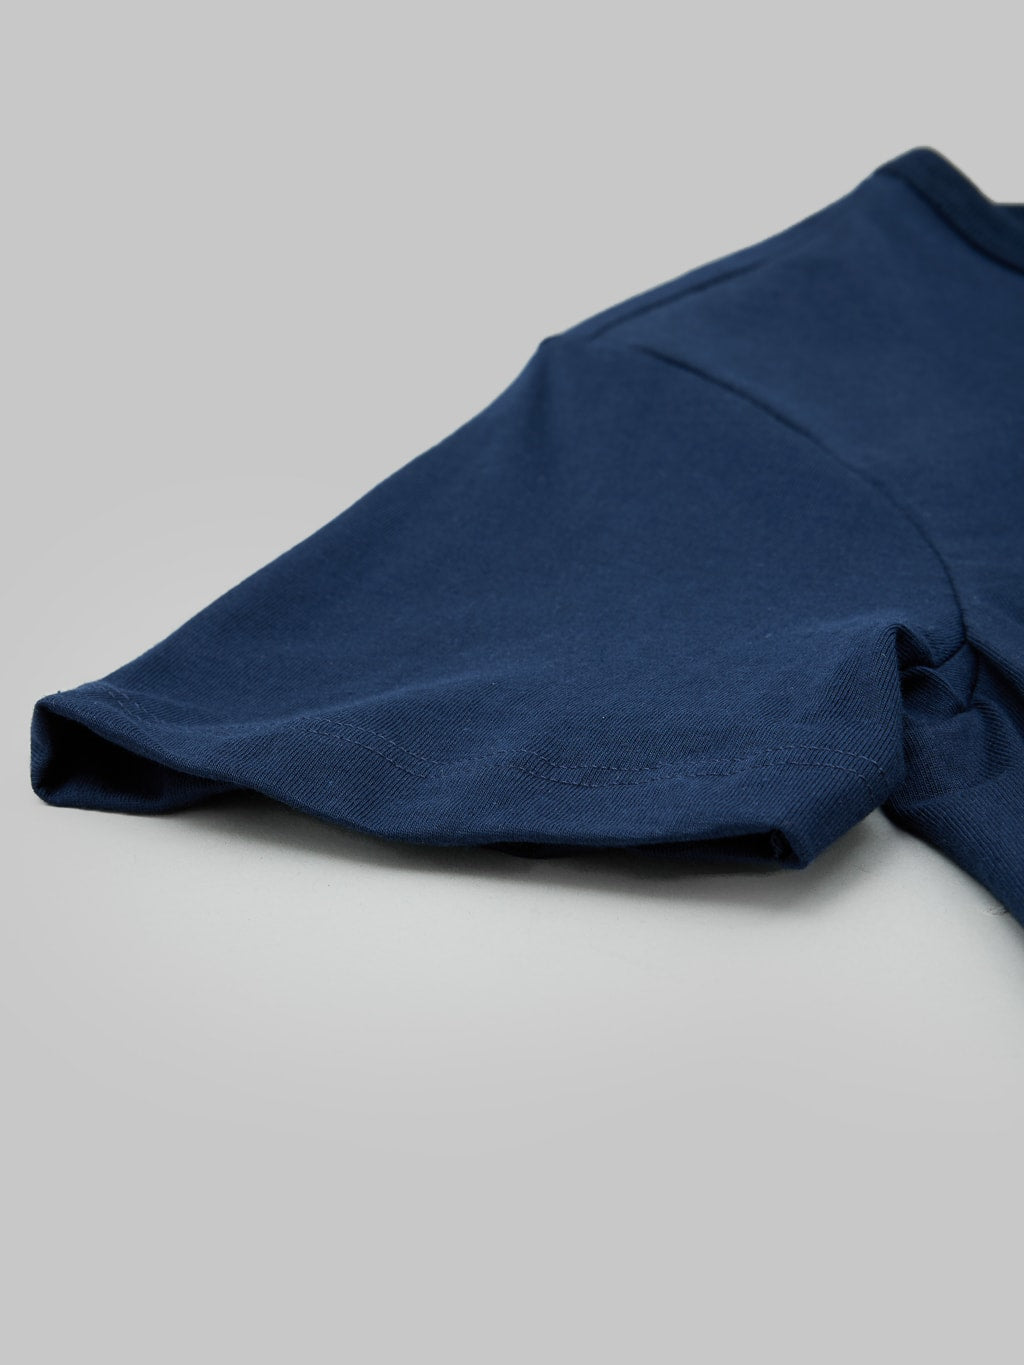 Merz b Schwanen 1950s Loopwheeled Classic Fit TShirt ink blue lightweight fabric